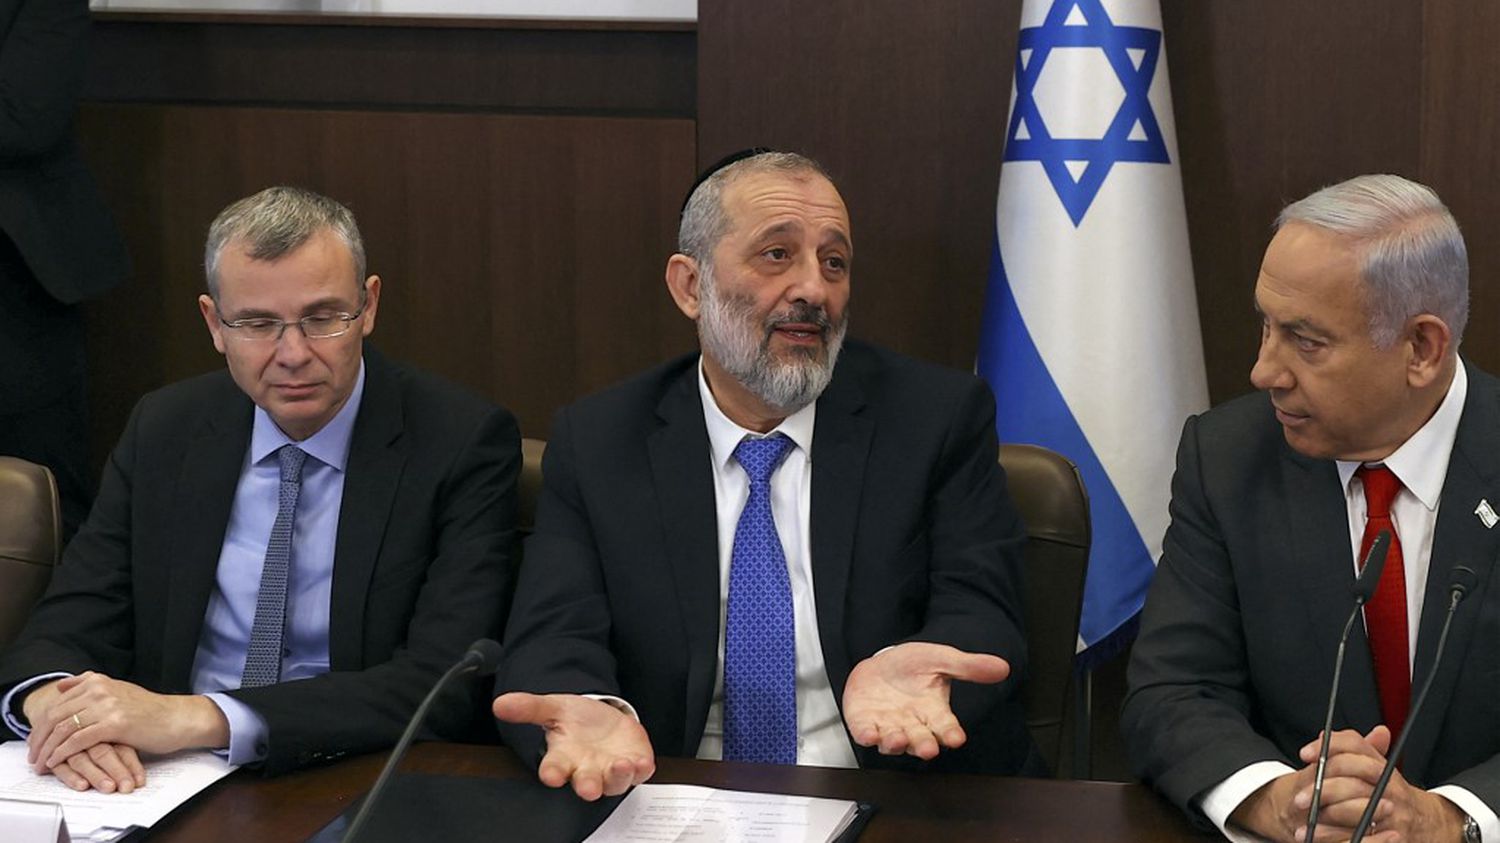 Israel: a key minister dismissed after a court decision
